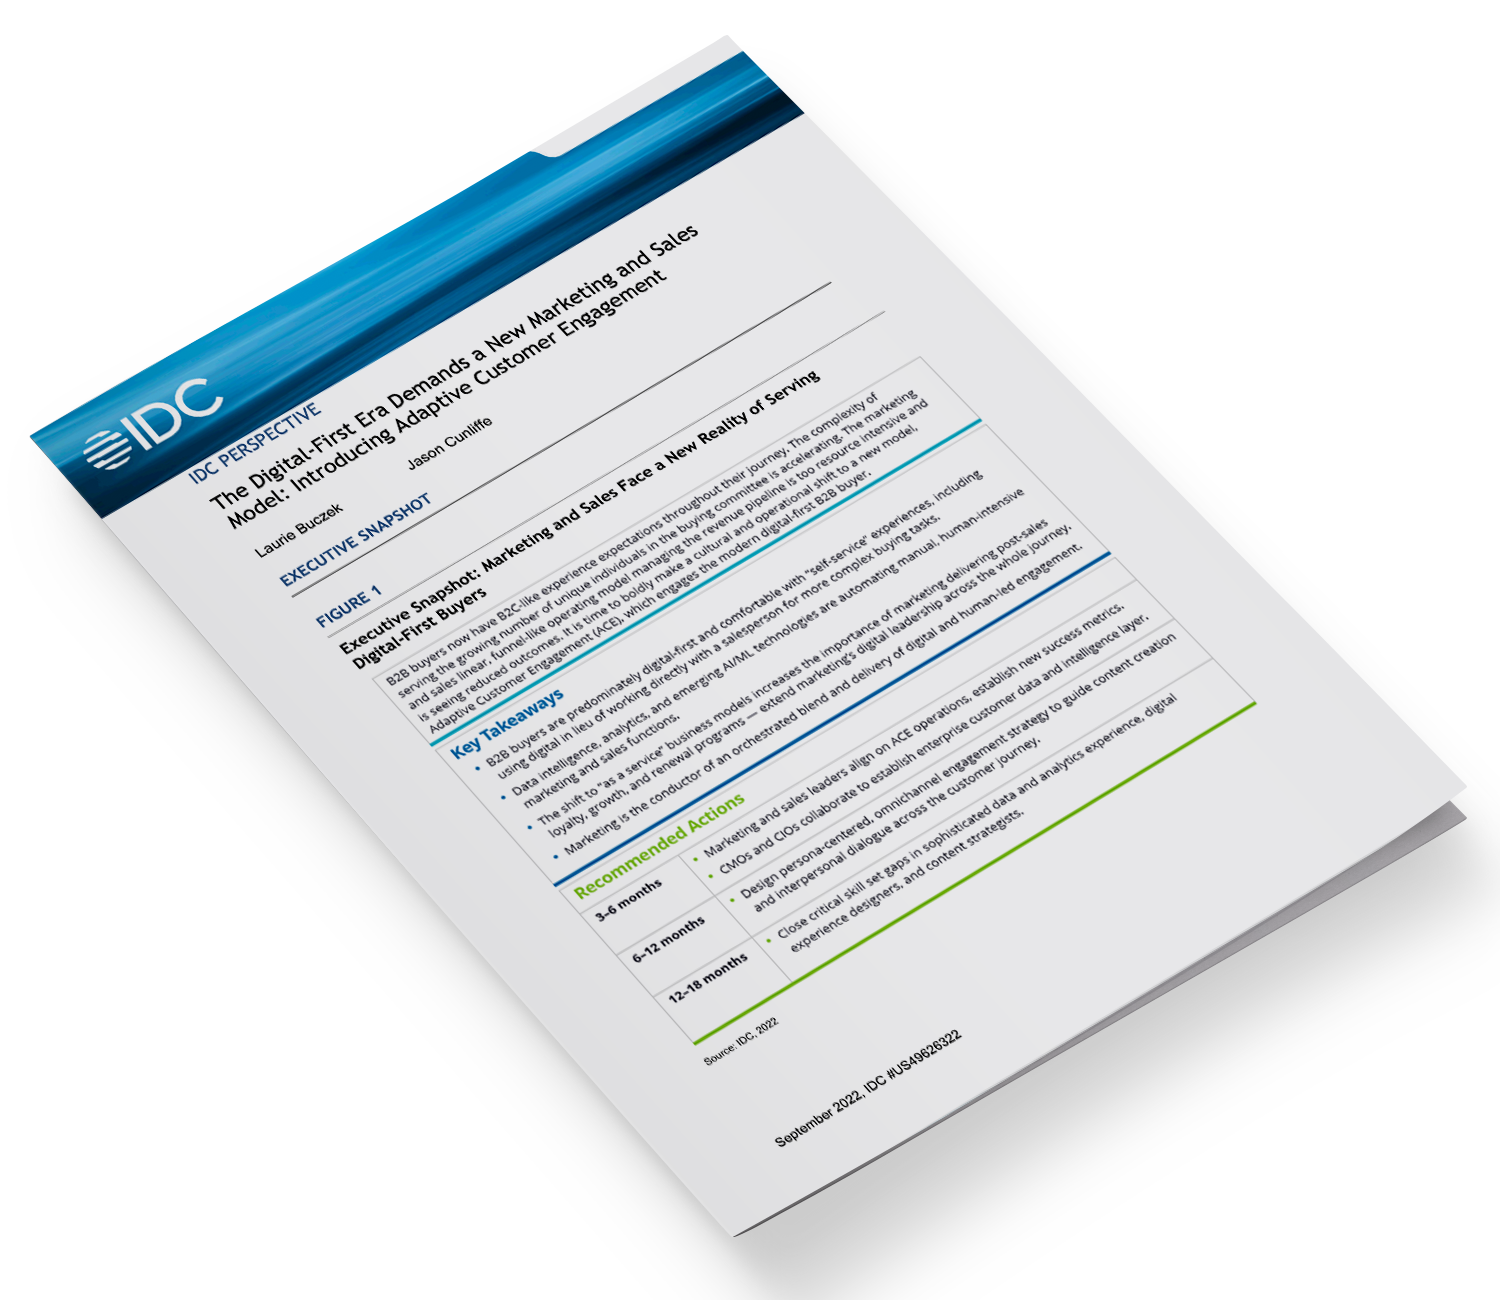 IDC Adaptive Customer Engagement Perspective Document